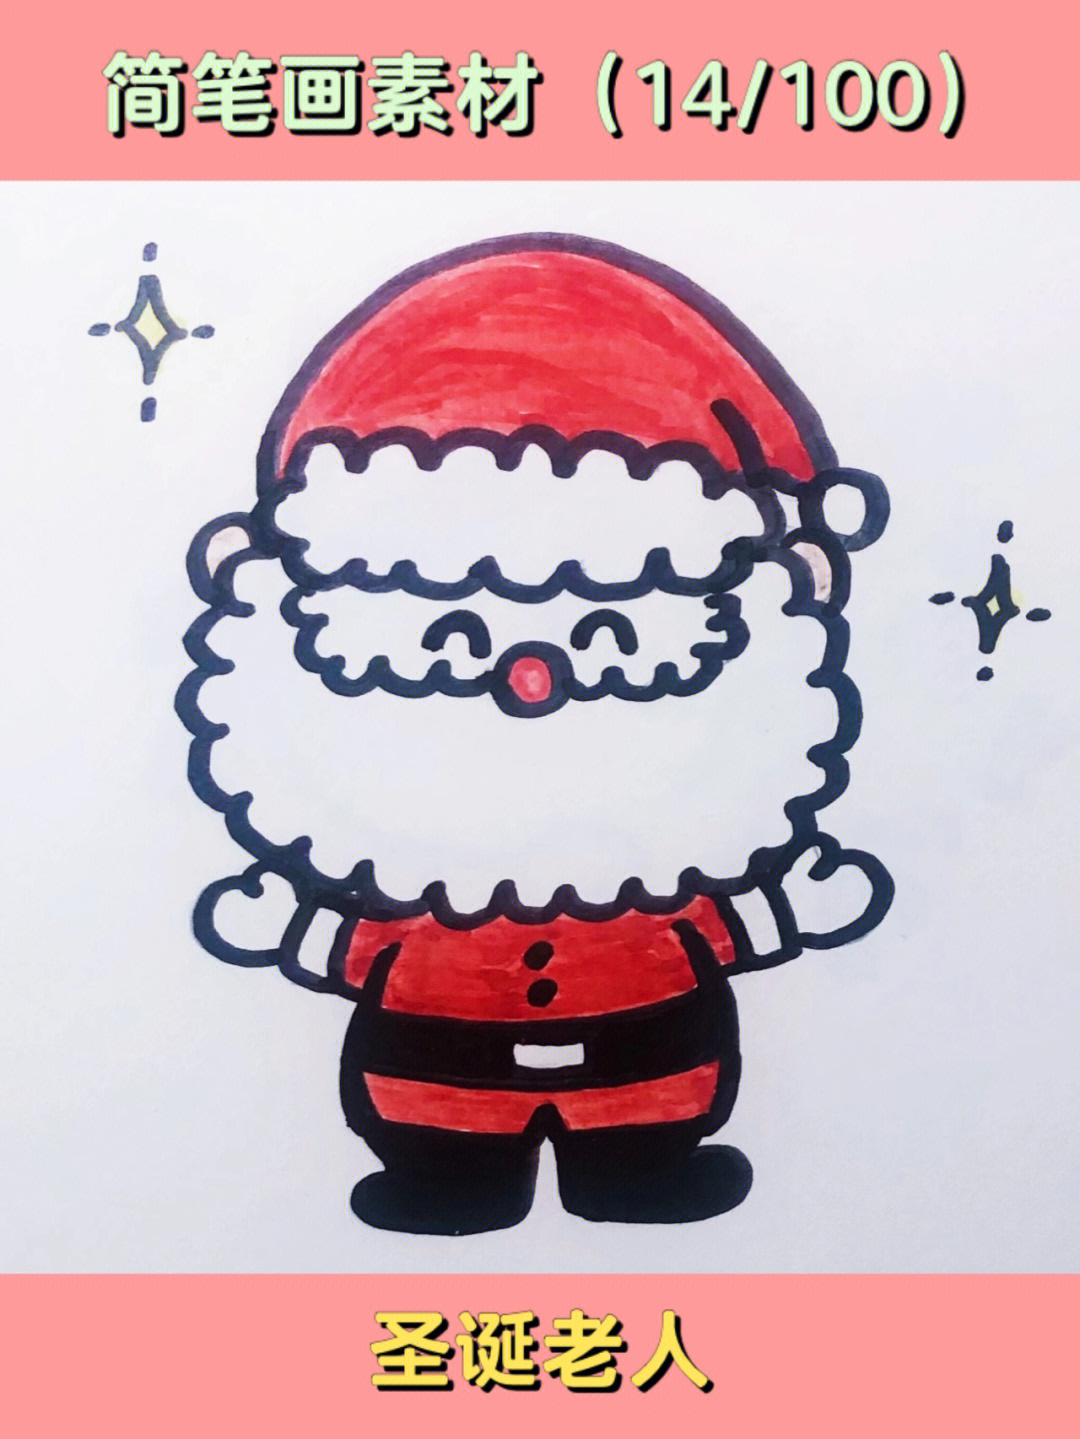 merry christmas简笔画图片